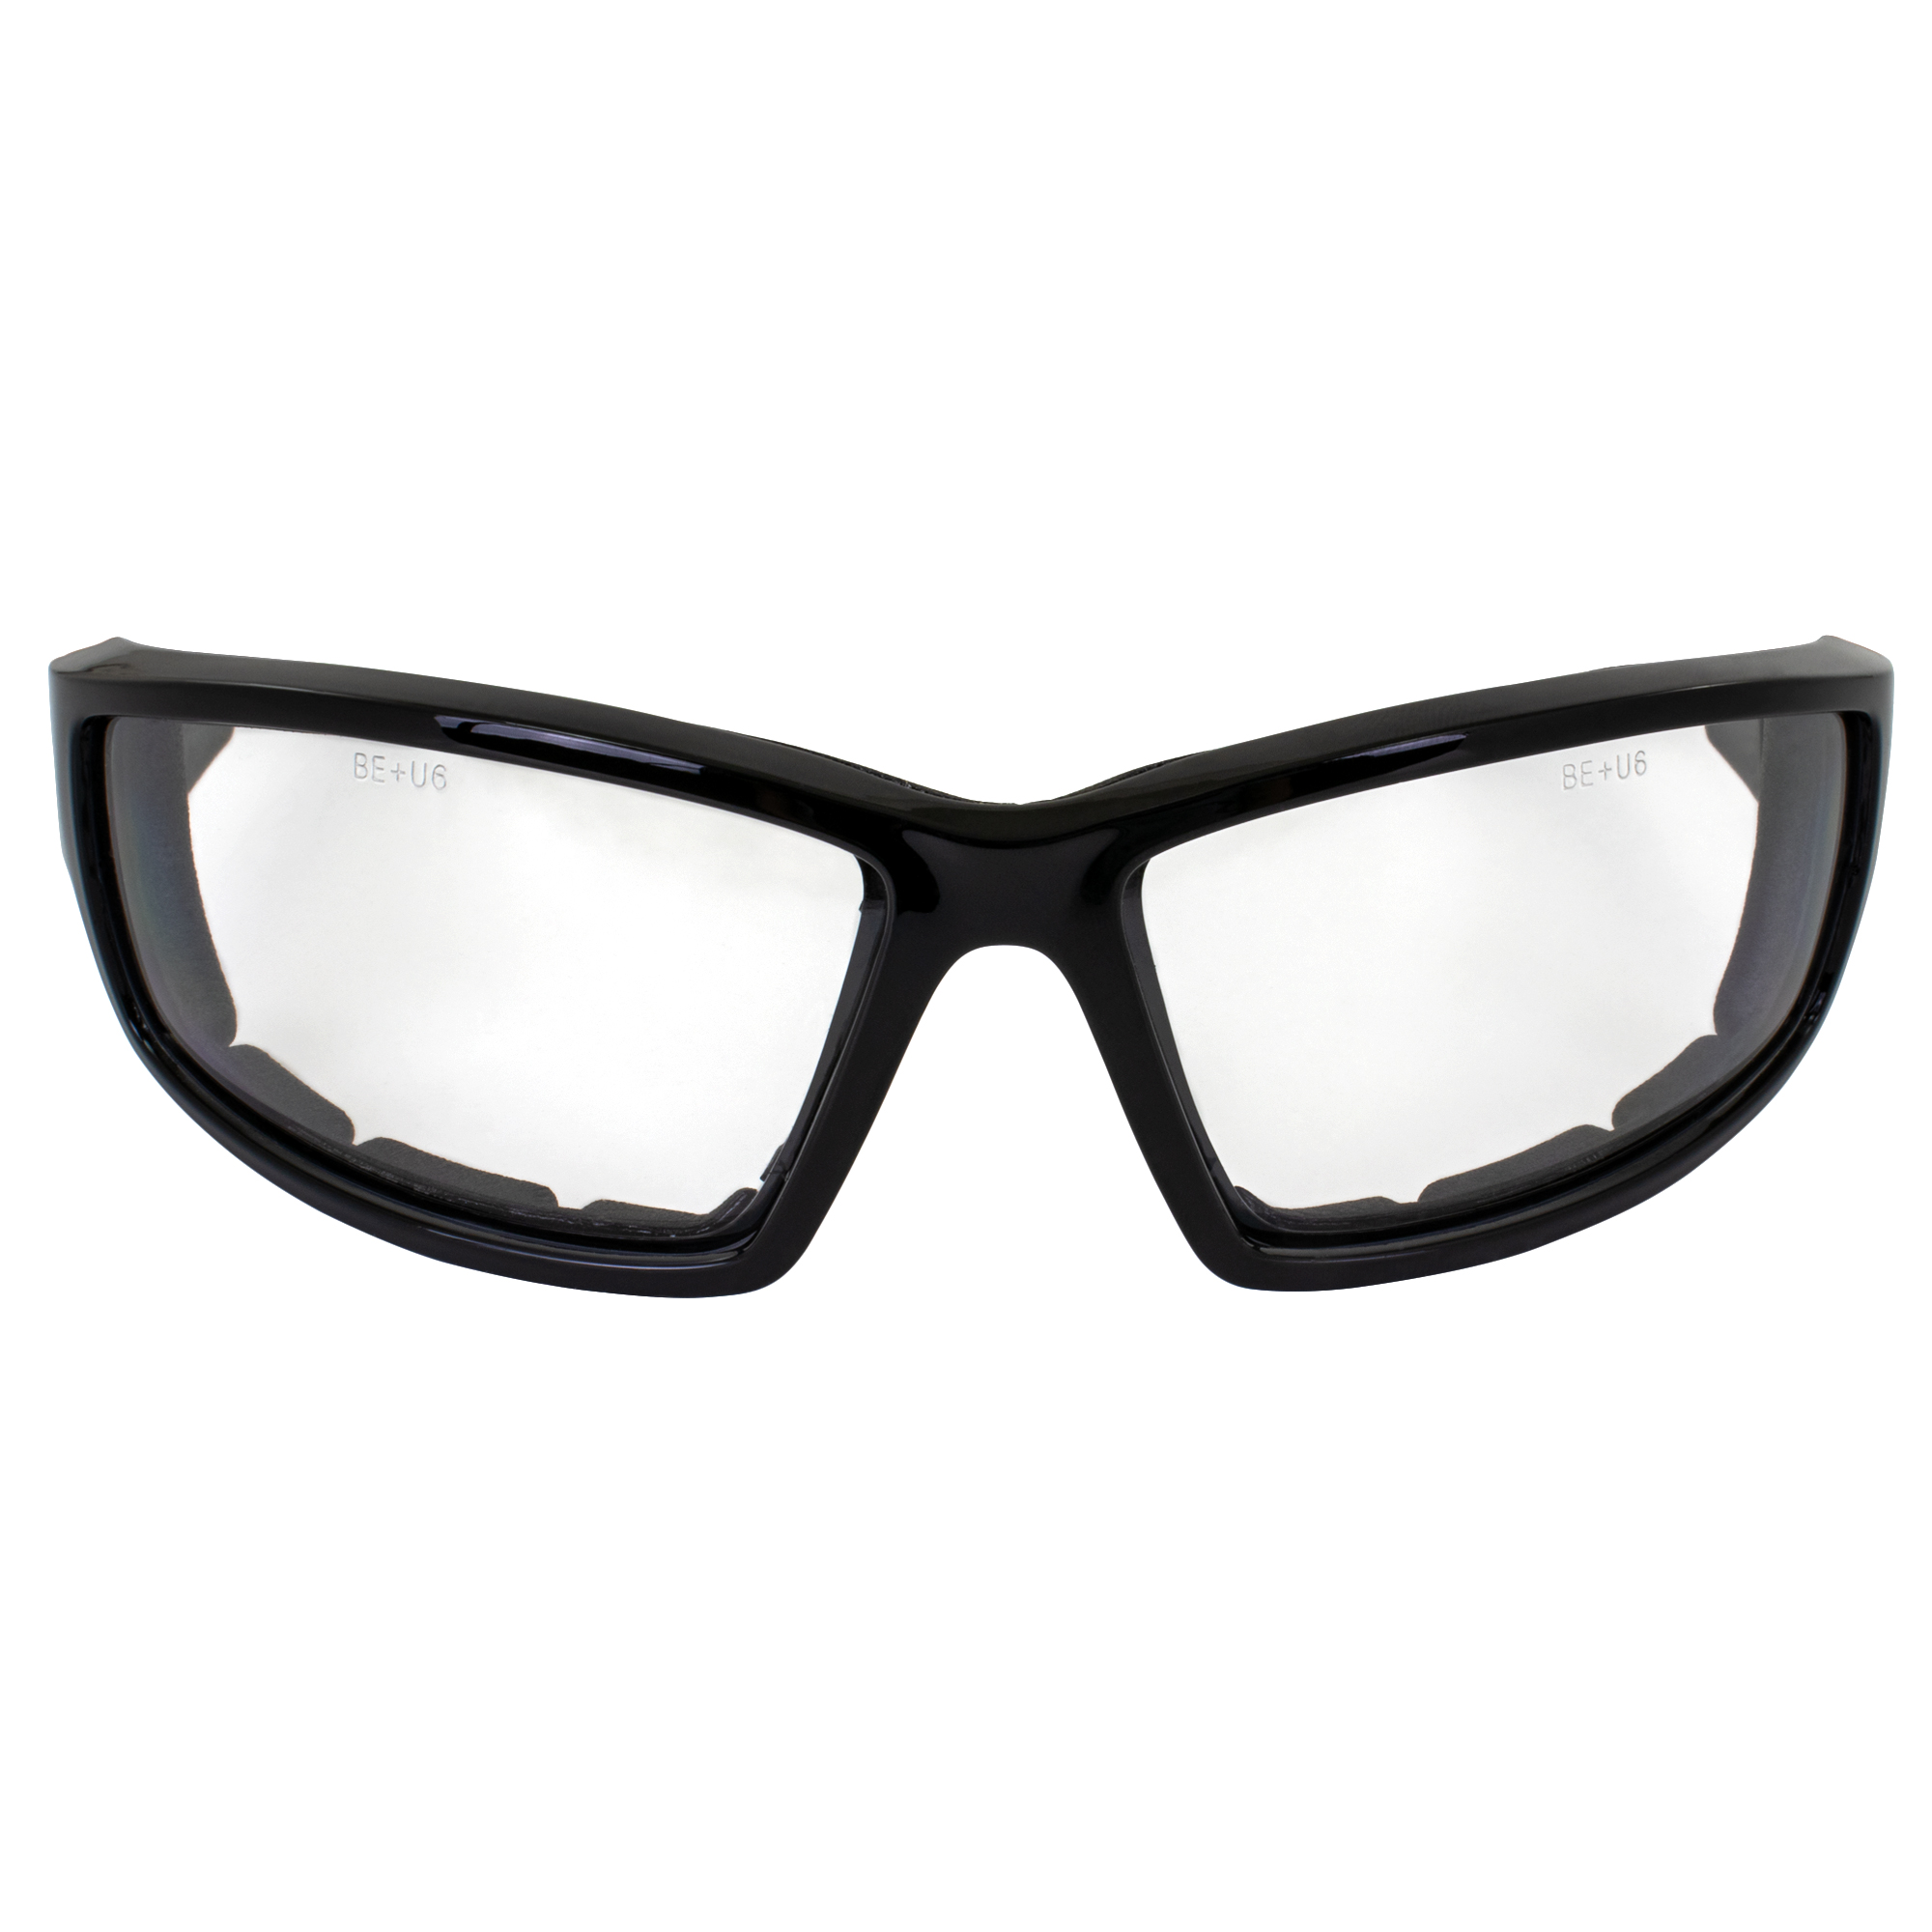 Birdz Eyewear Swoop Anti-Fog Padded Motorcycle Riding Sunglasses Black Frame Lenses for Day & Night ANSI Z87 .1 - image 2 of 7